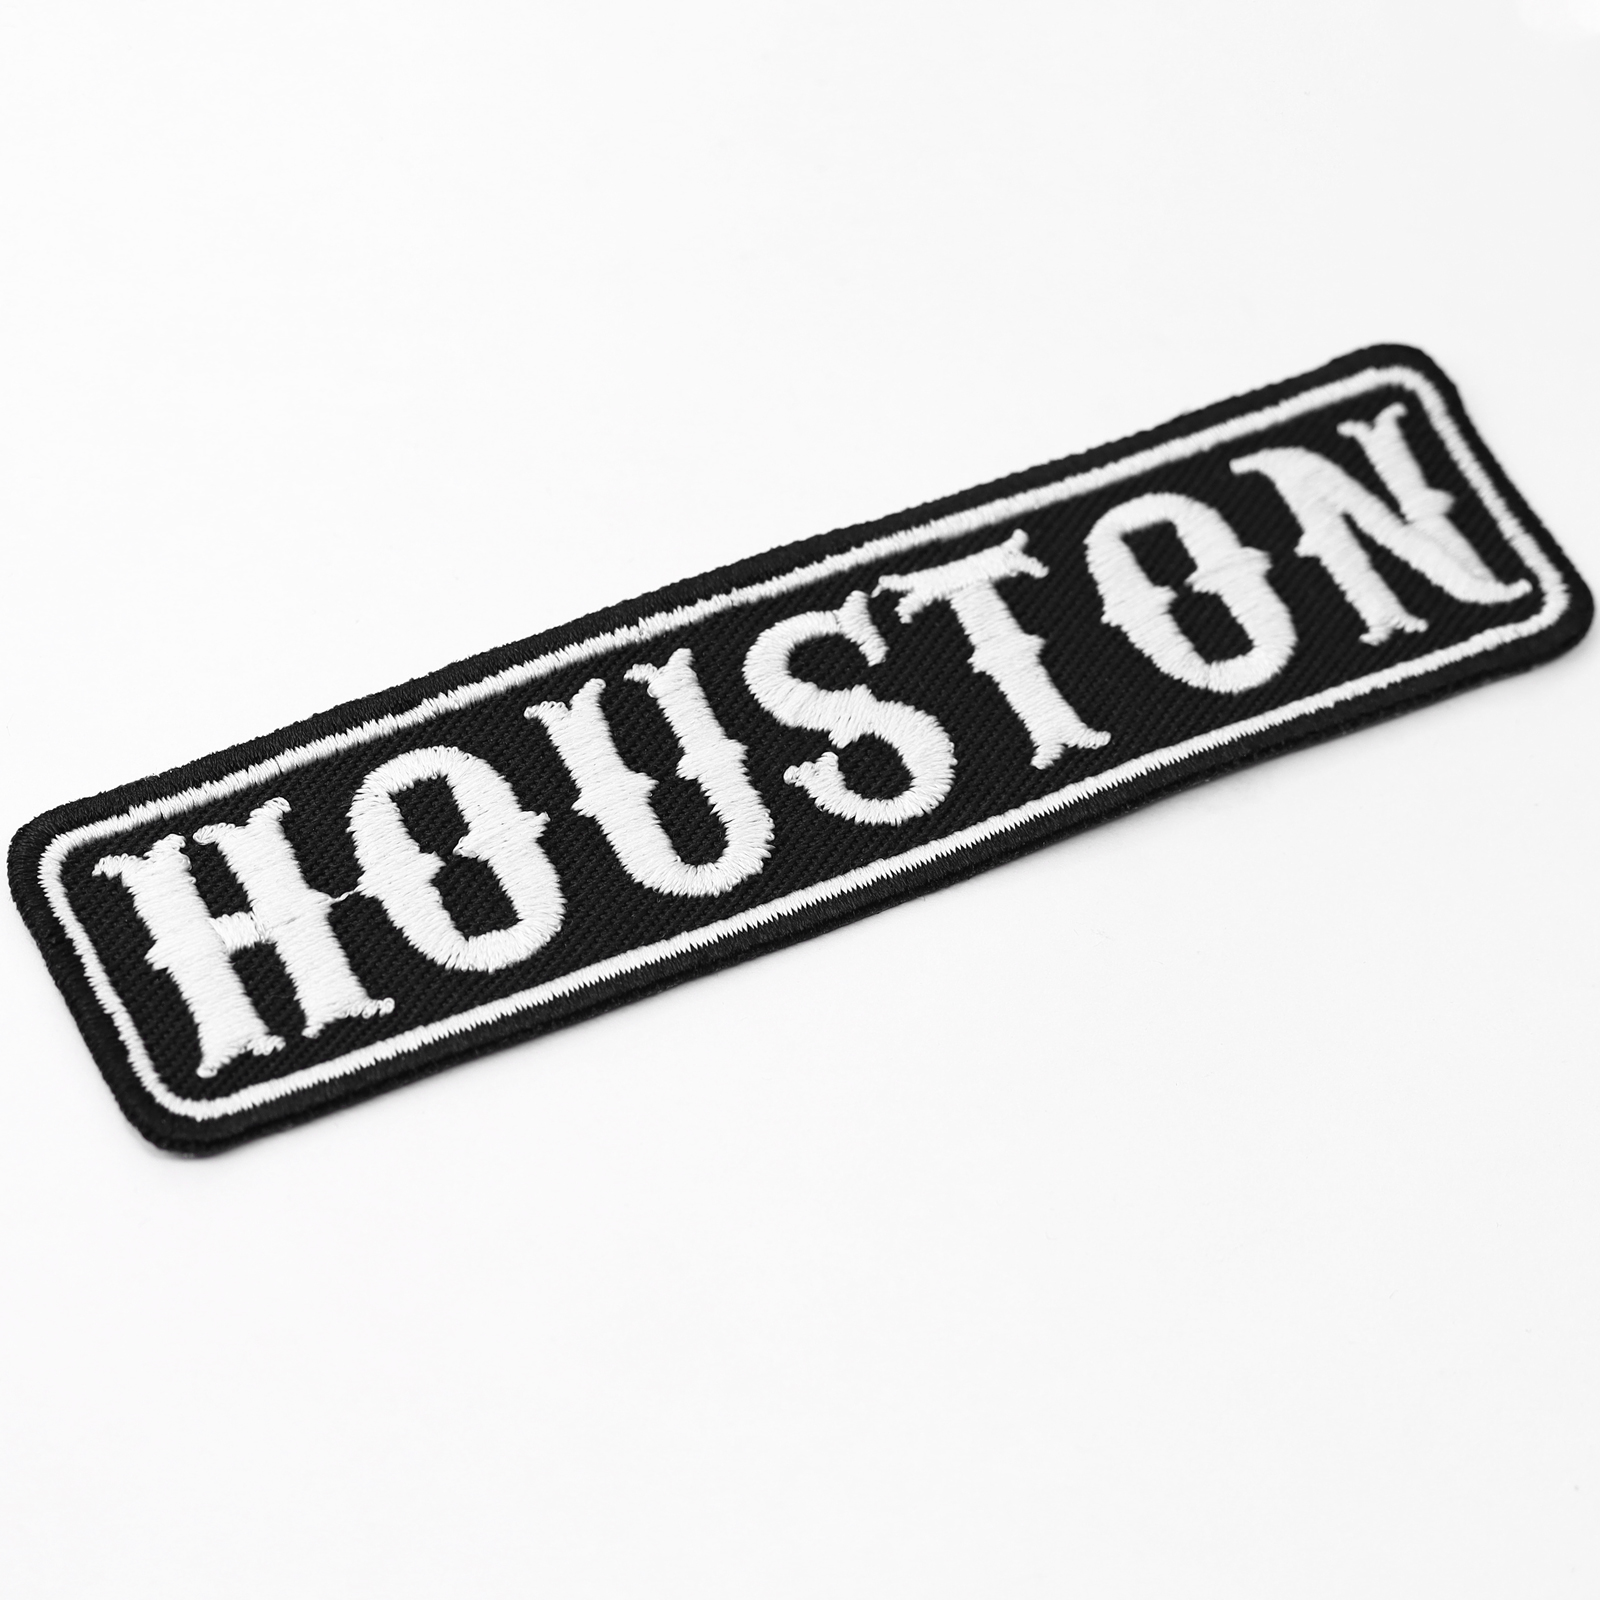 Houston - Patch